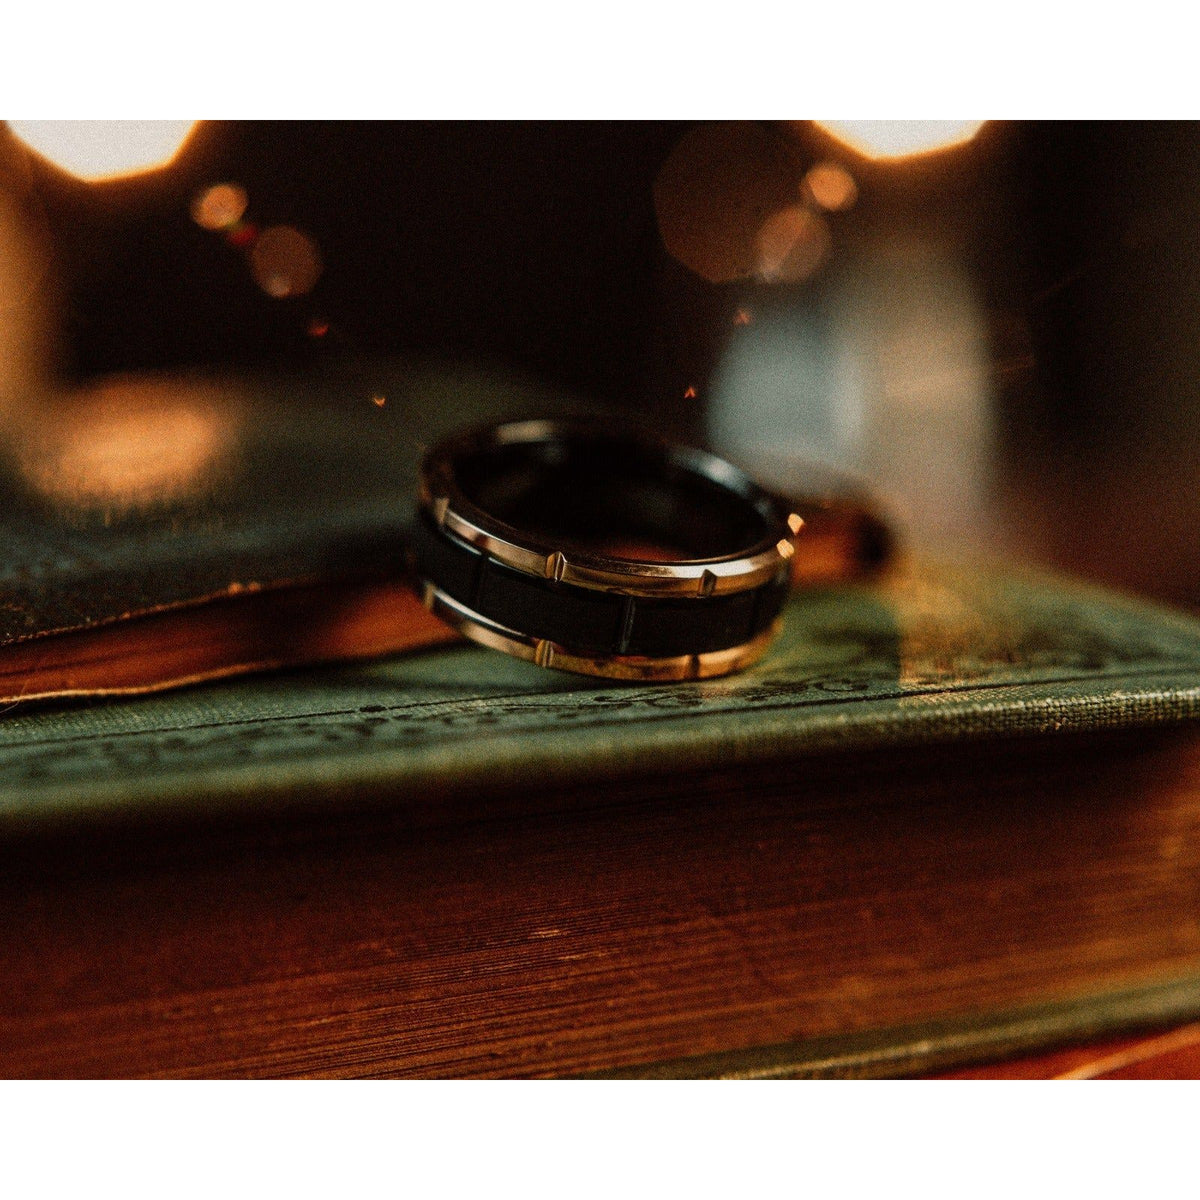 The “Duke” Ring by Vintage Gentlemen